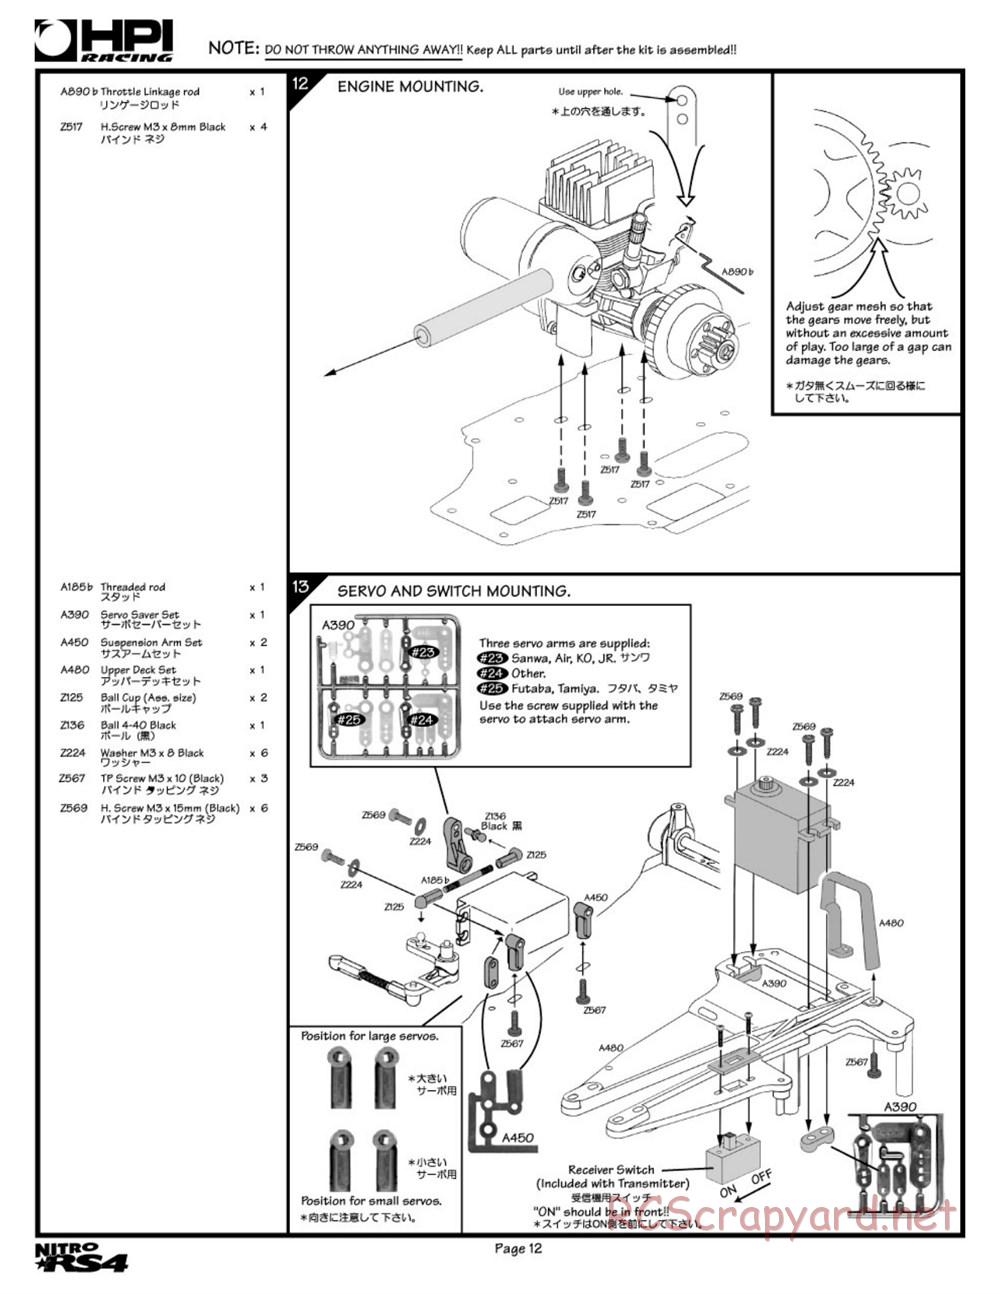 HPI - Nitro RS4 - Manual - Page 12